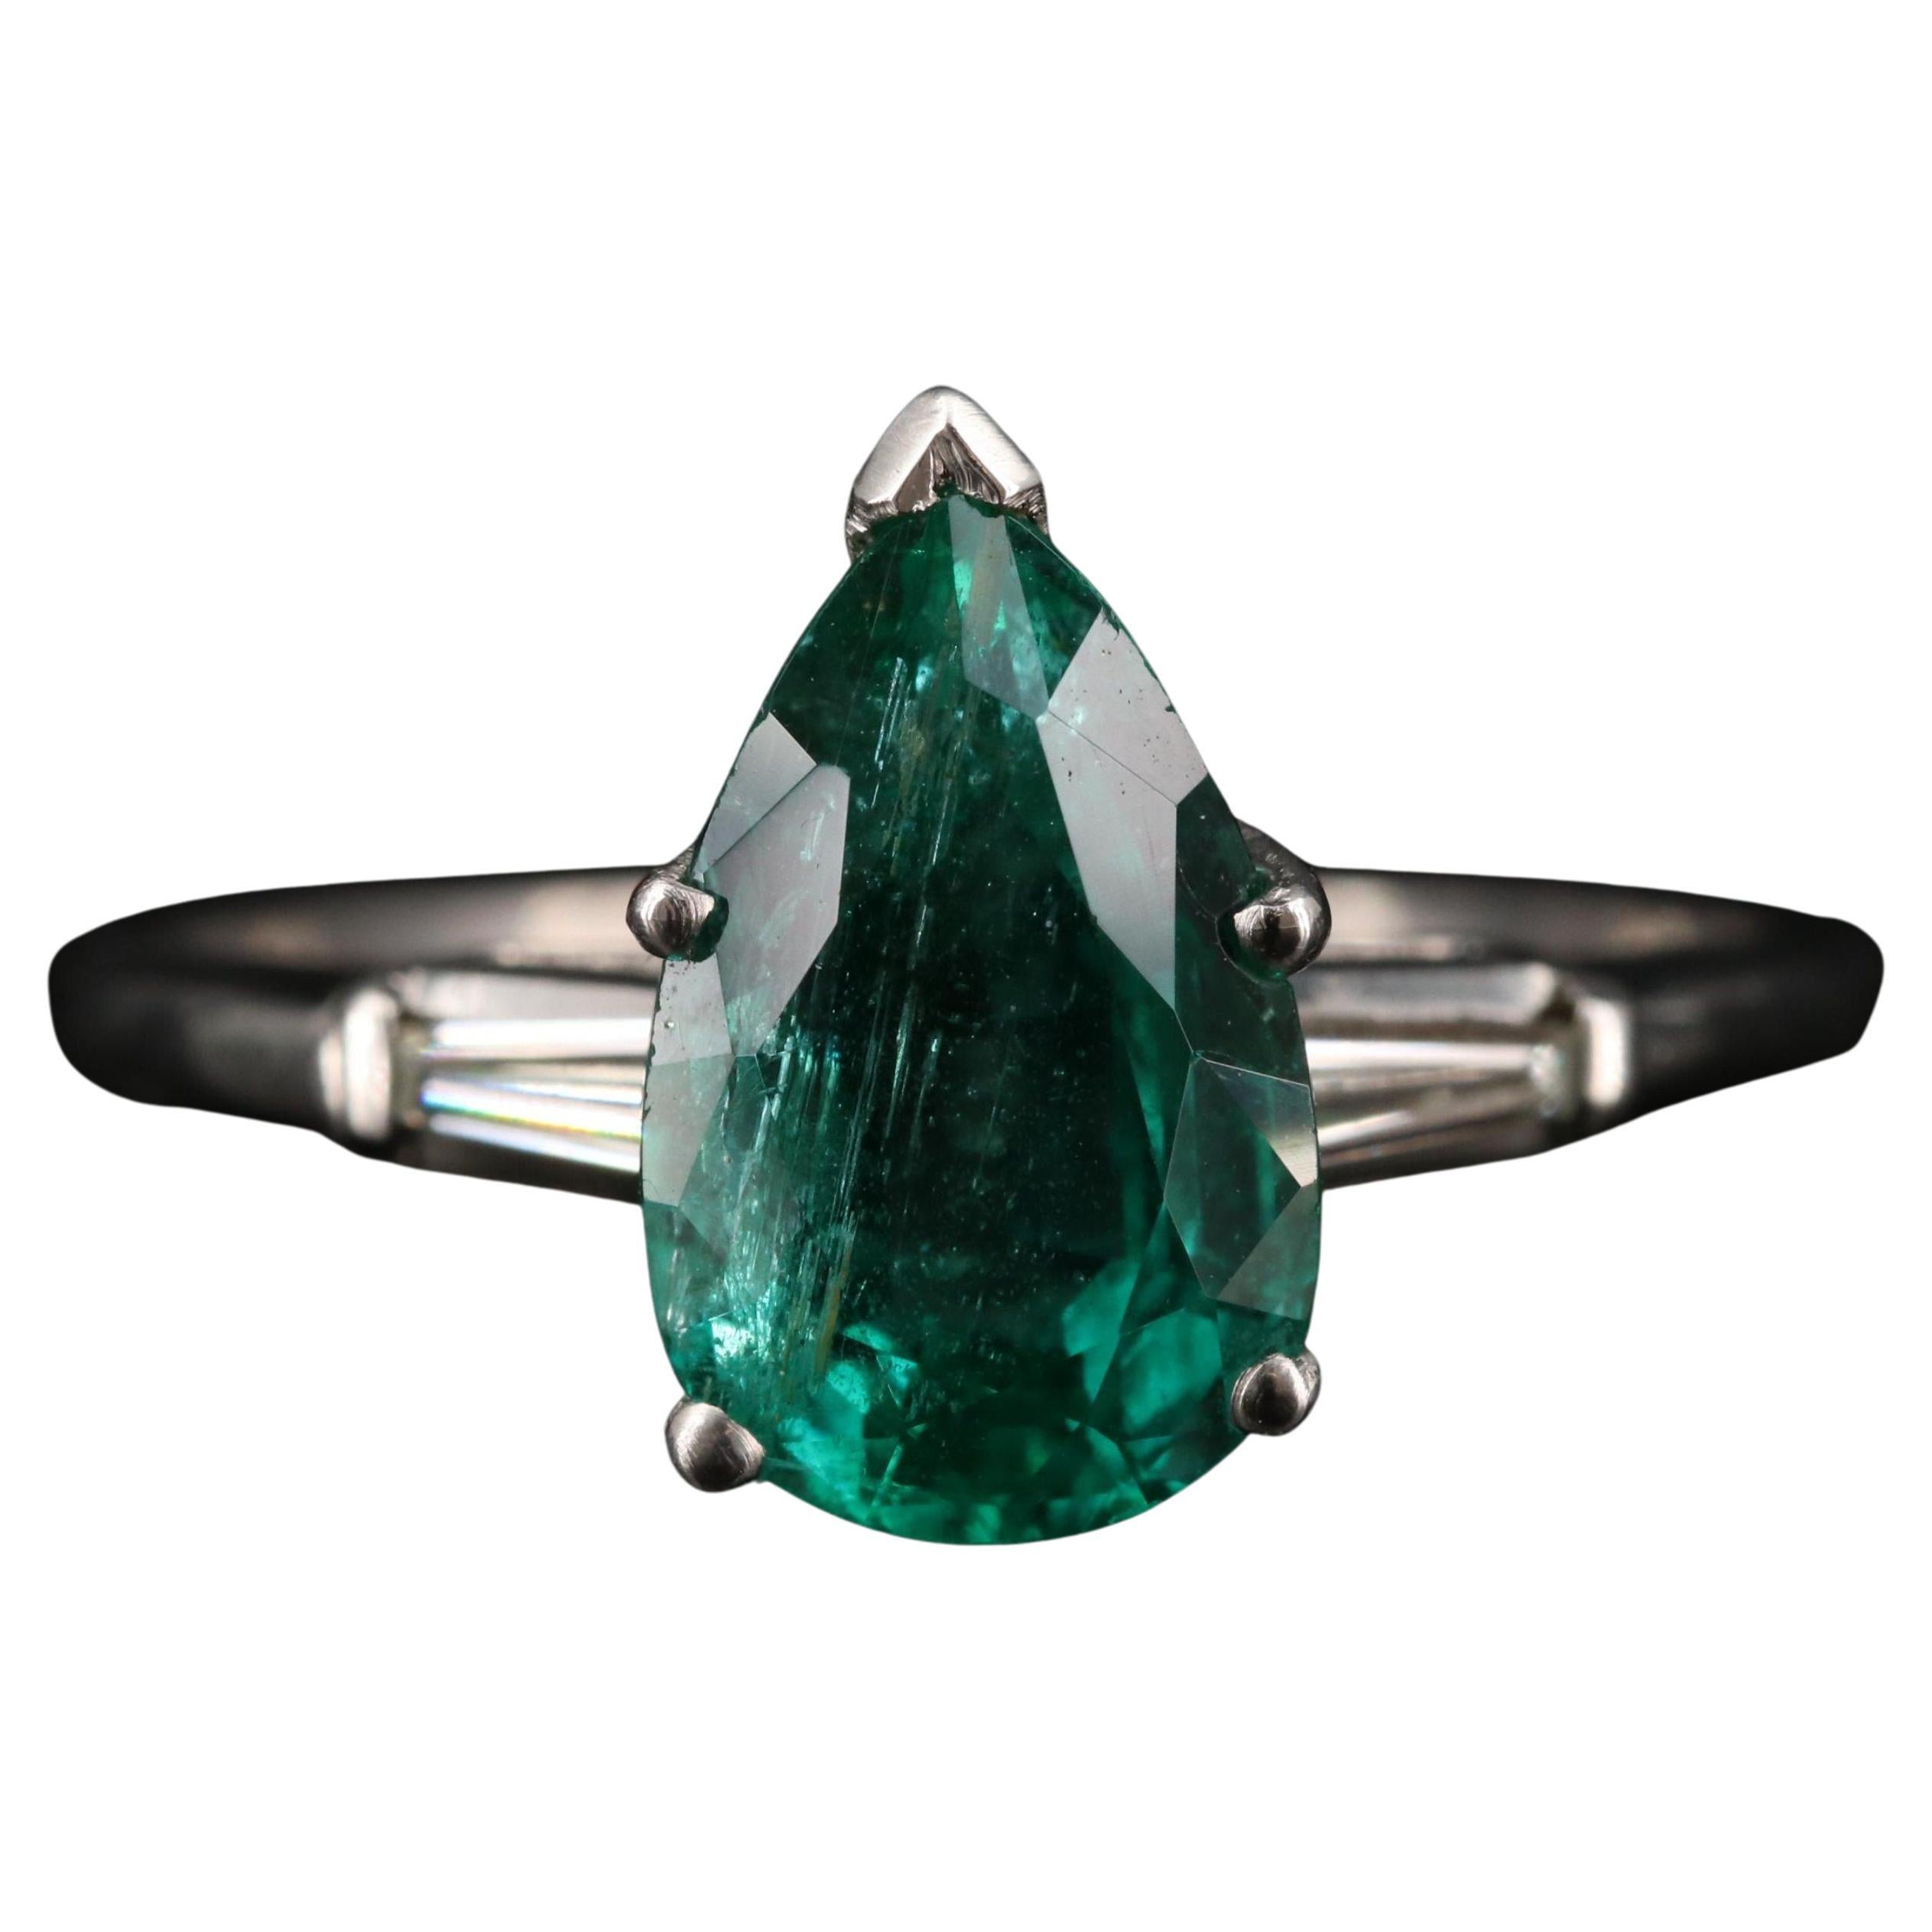 For Sale:  2.5 Carat Pear Cut Emerald Diamond Engagement Ring Art Deco Emerald Bridal Ring